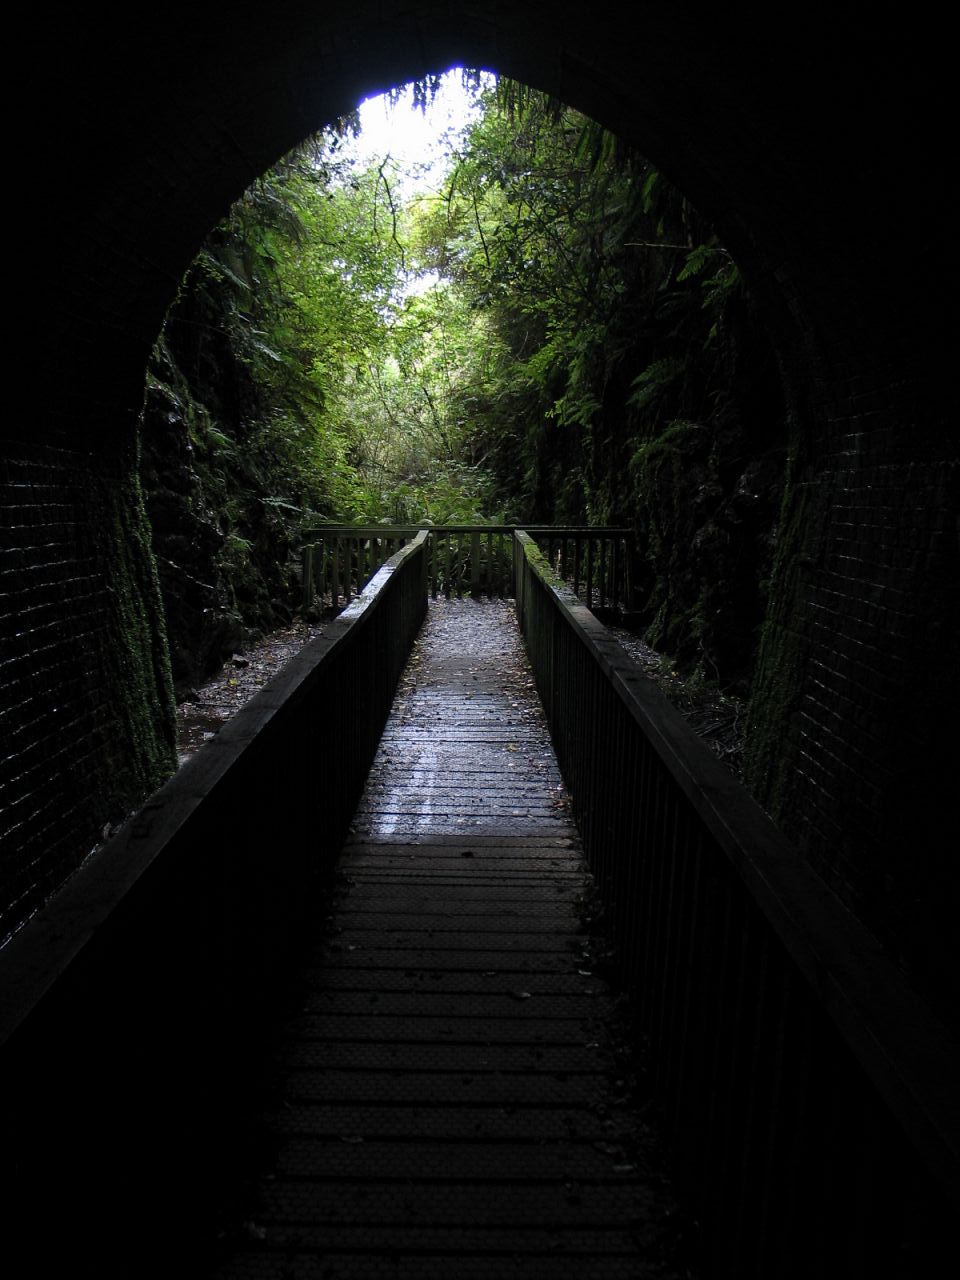 fotka / image tunel stare zeleznice, New Zealand